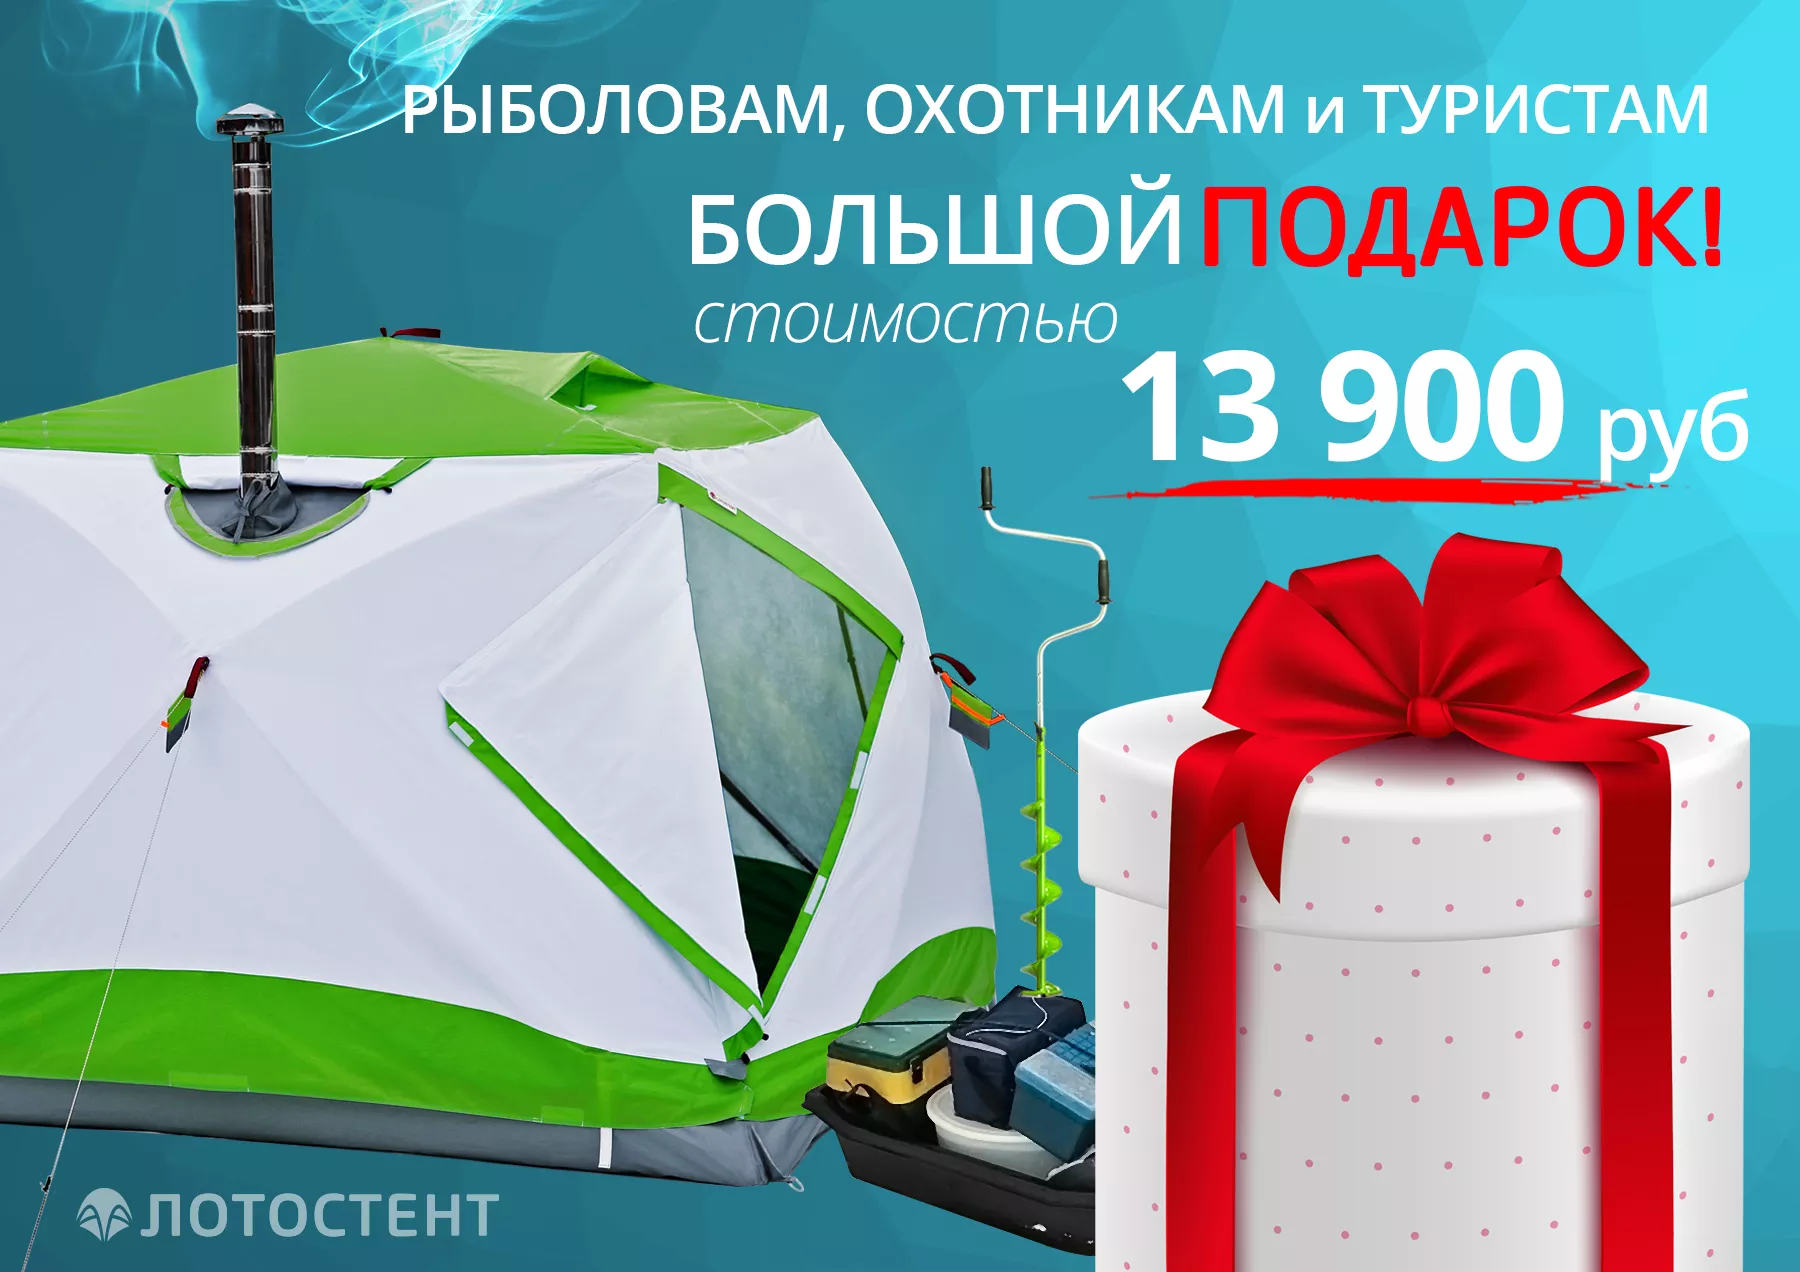 Подарок рыболовам, охотникам и туристам на 13 900 руб!